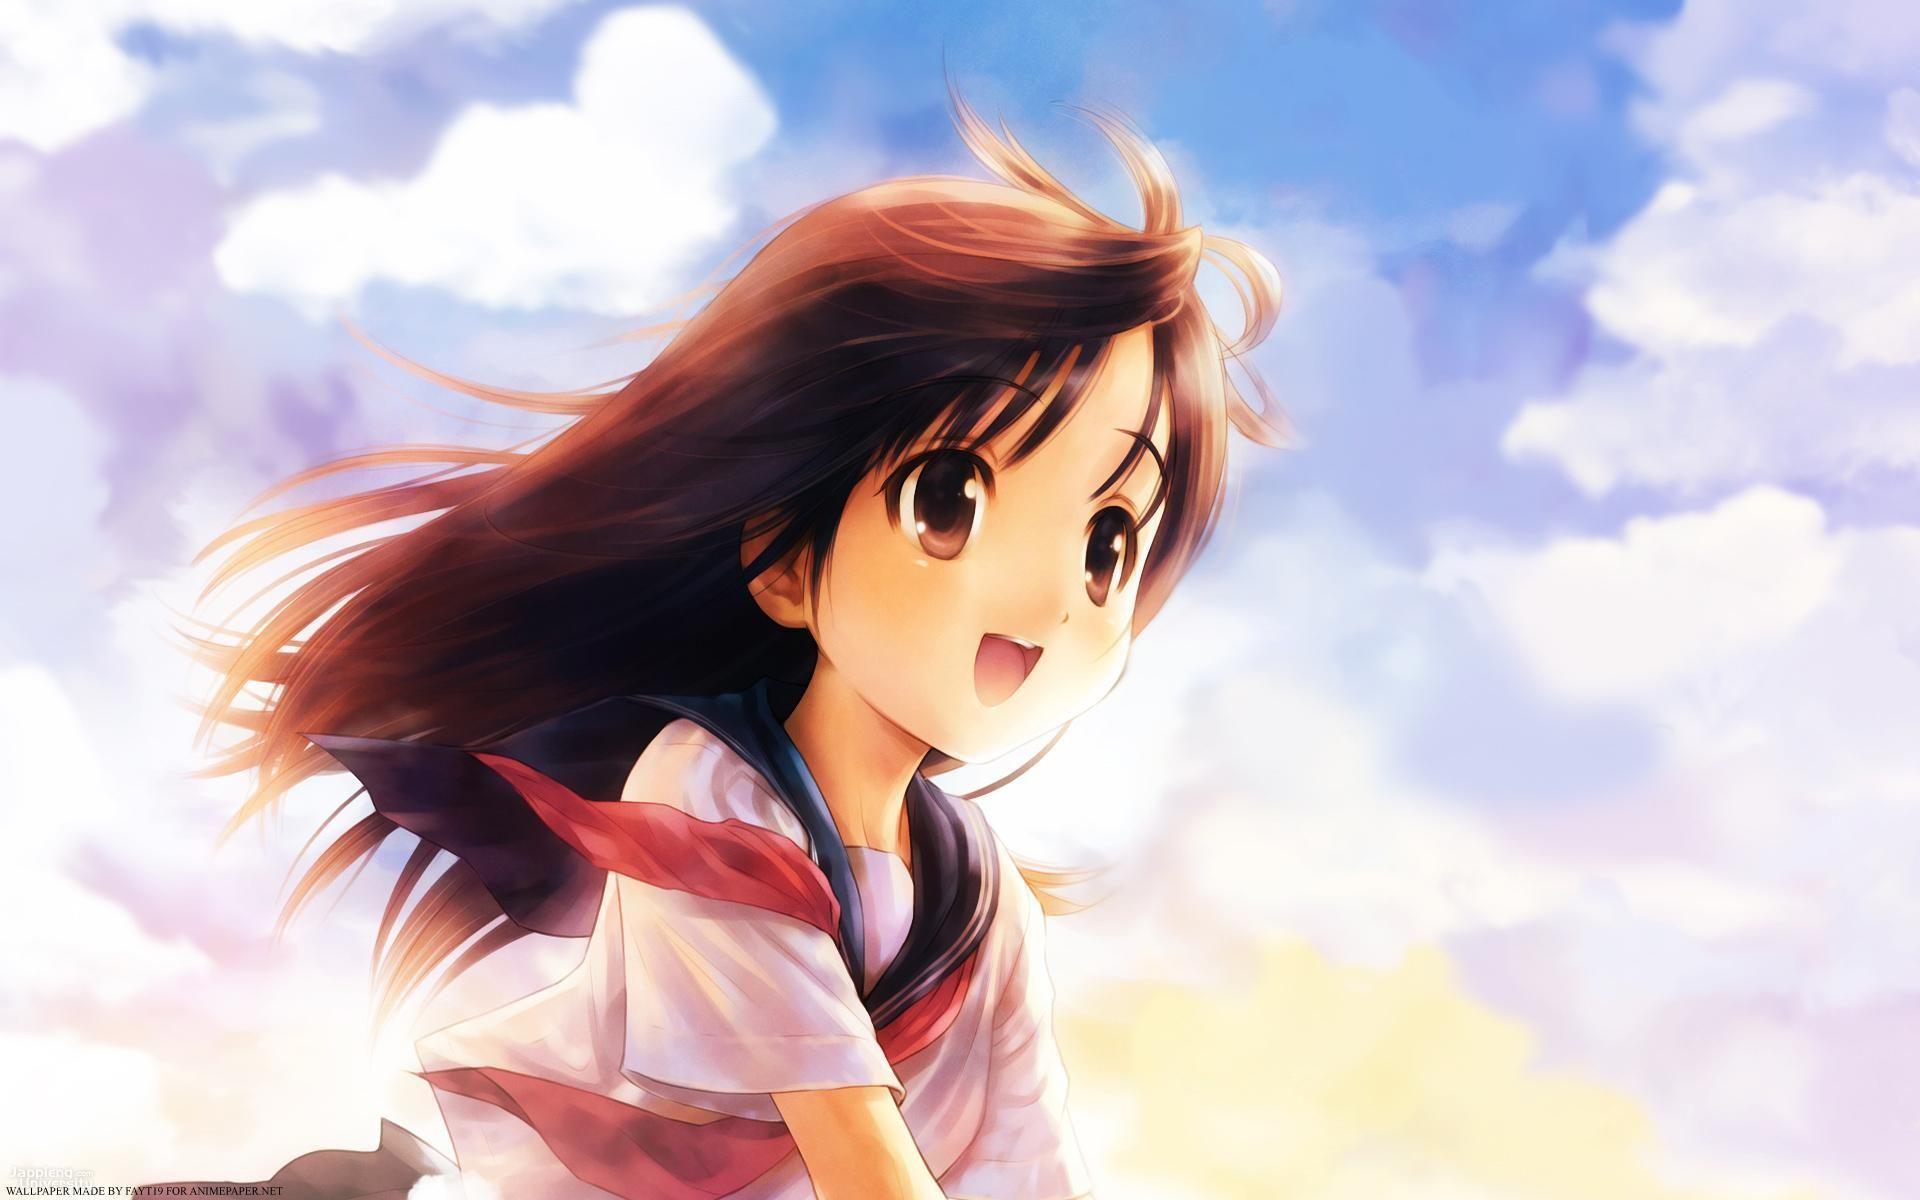 Cute Anime Wallpaper HD. Anime wallpaper. Anime